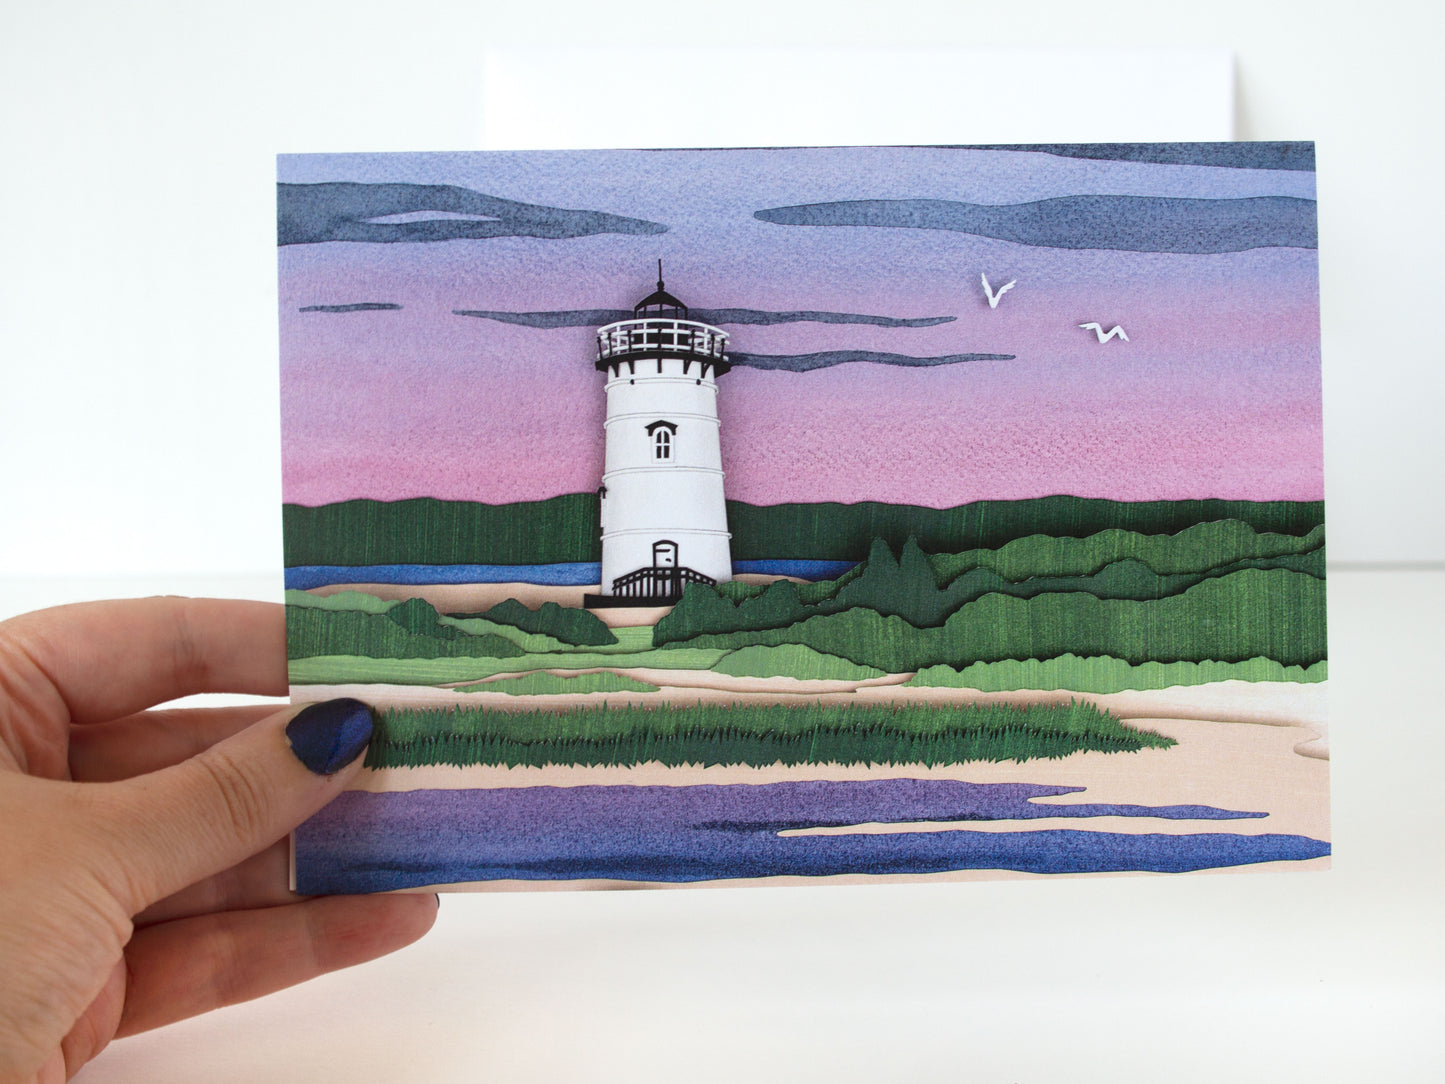 Edgartown Lighthouse at Sunset Card